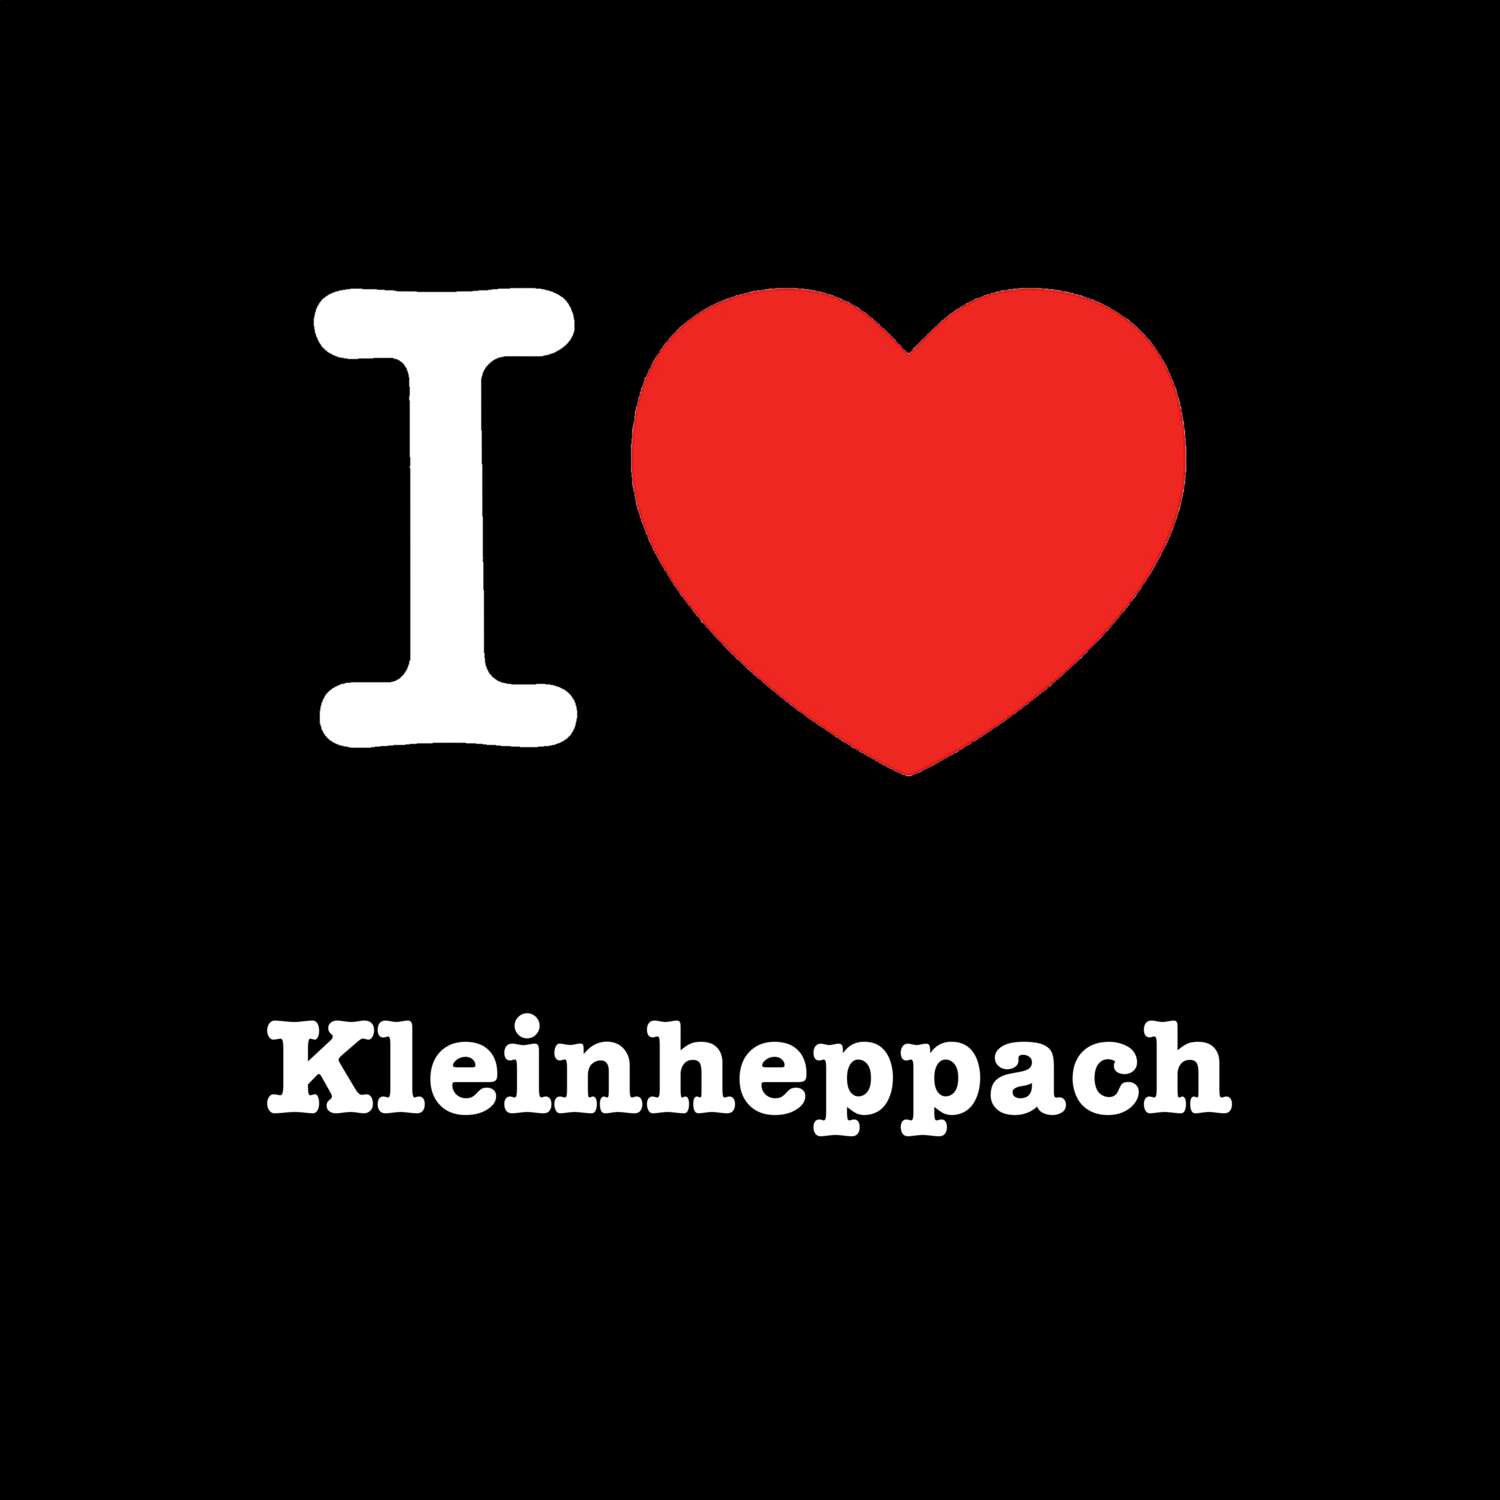 Kleinheppach T-Shirt »I love«